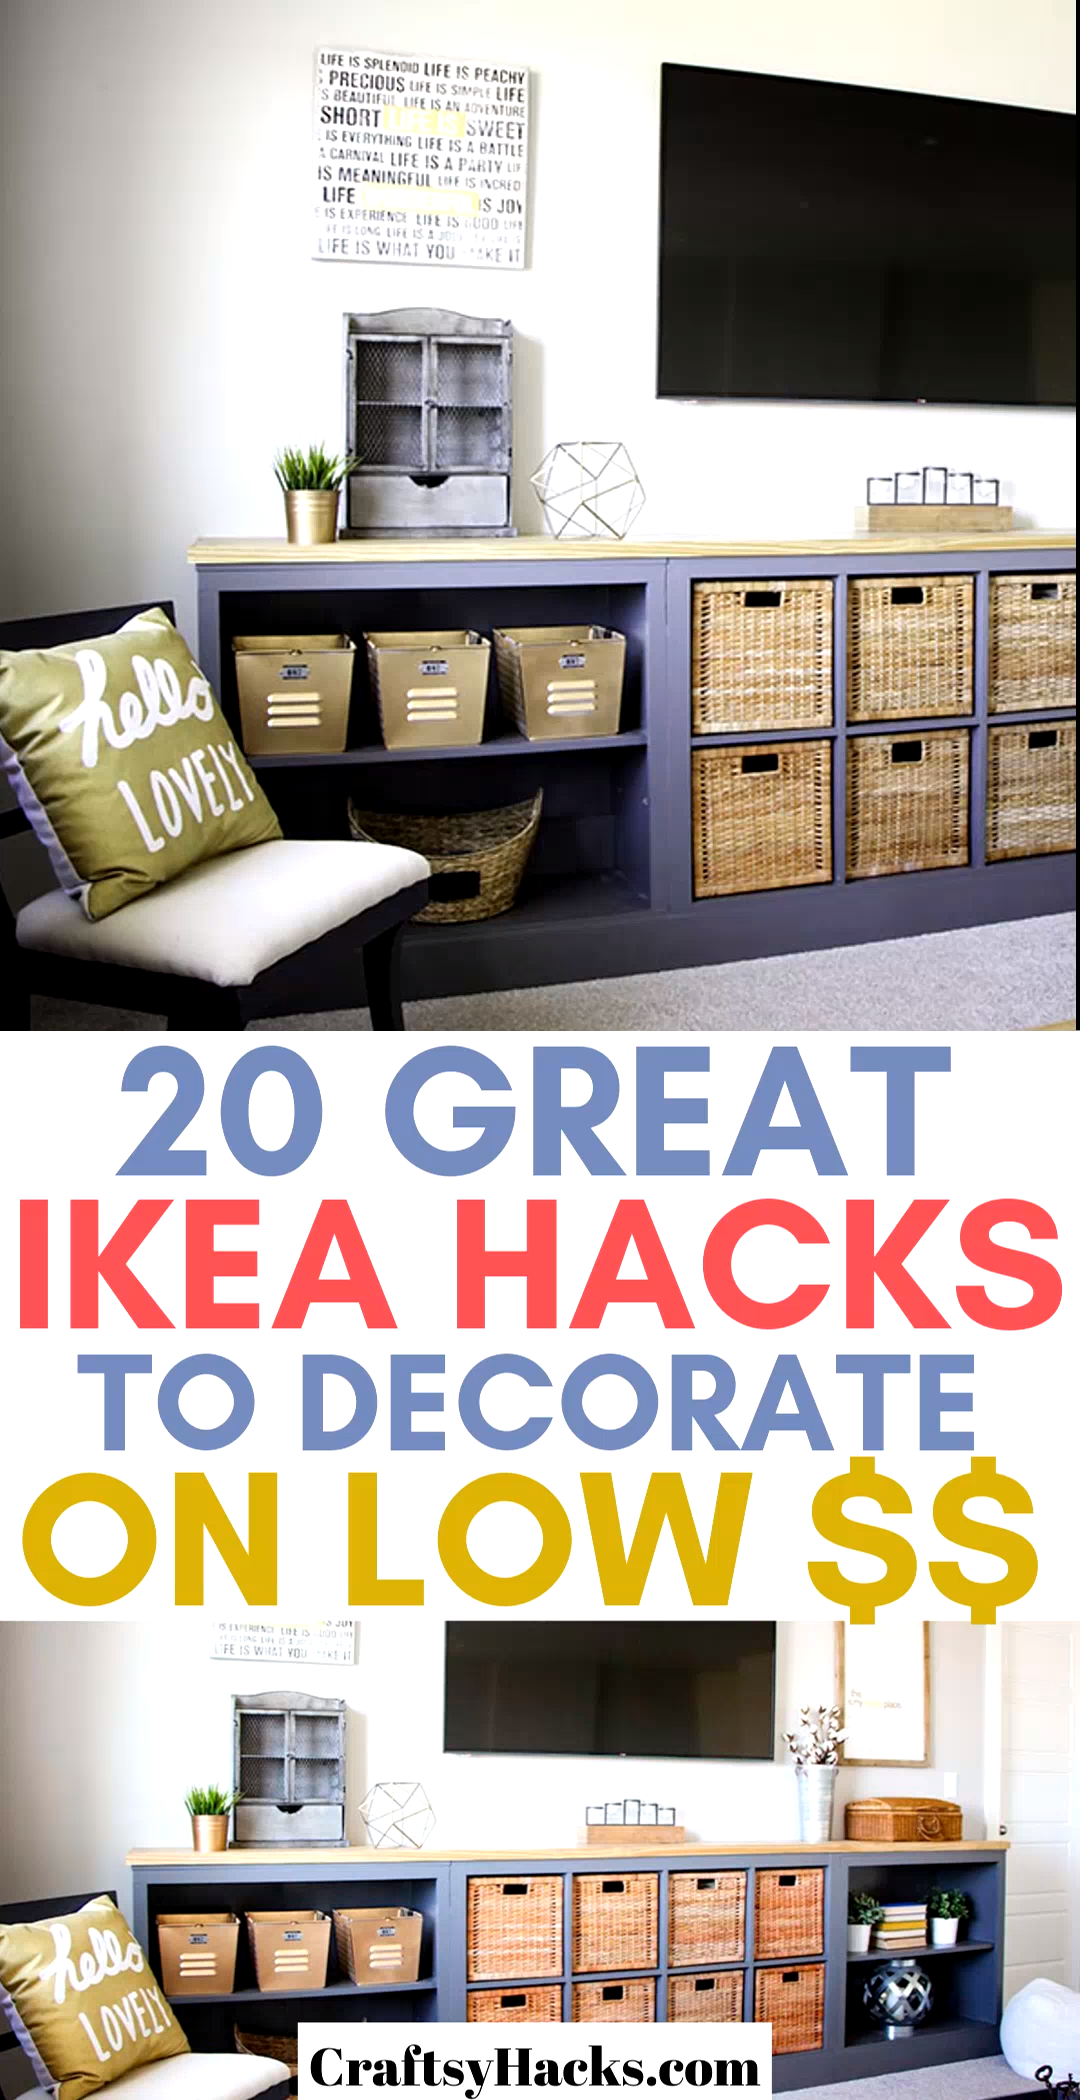 20 Great Ikea Hacks to Decorate on Low $$ - 20 Great Ikea Hacks to Decorate on Low $$ -   18 diy Desk hack ideas